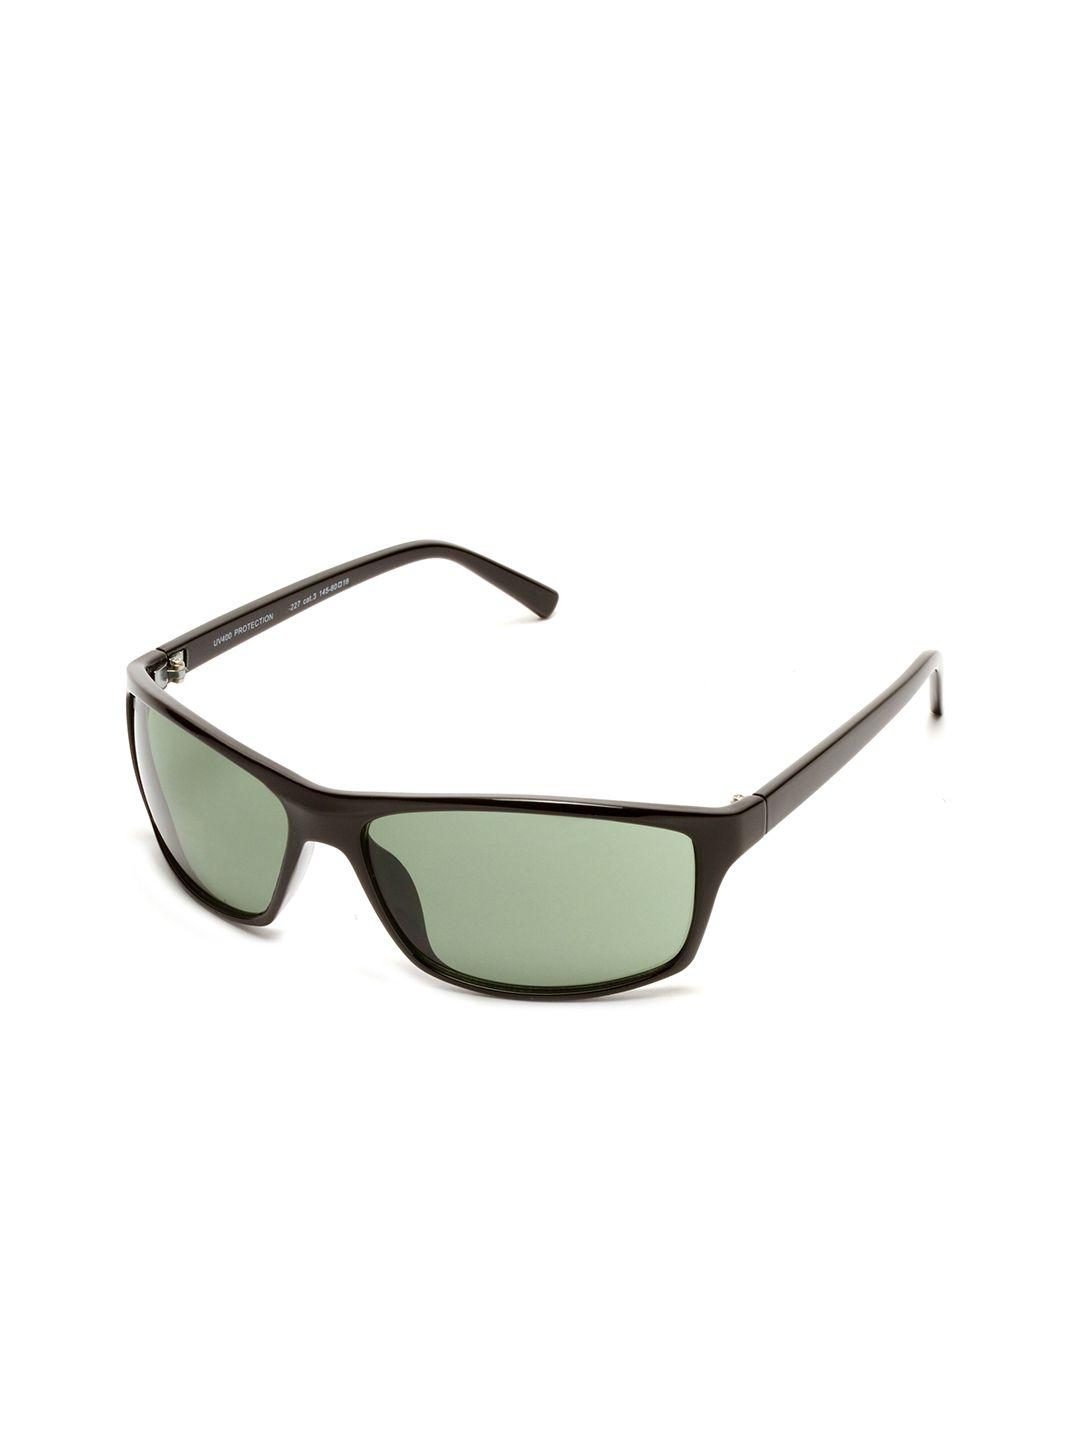 roadies unisex green lens & black square sunglasses with uv protected lens rd-227-c1